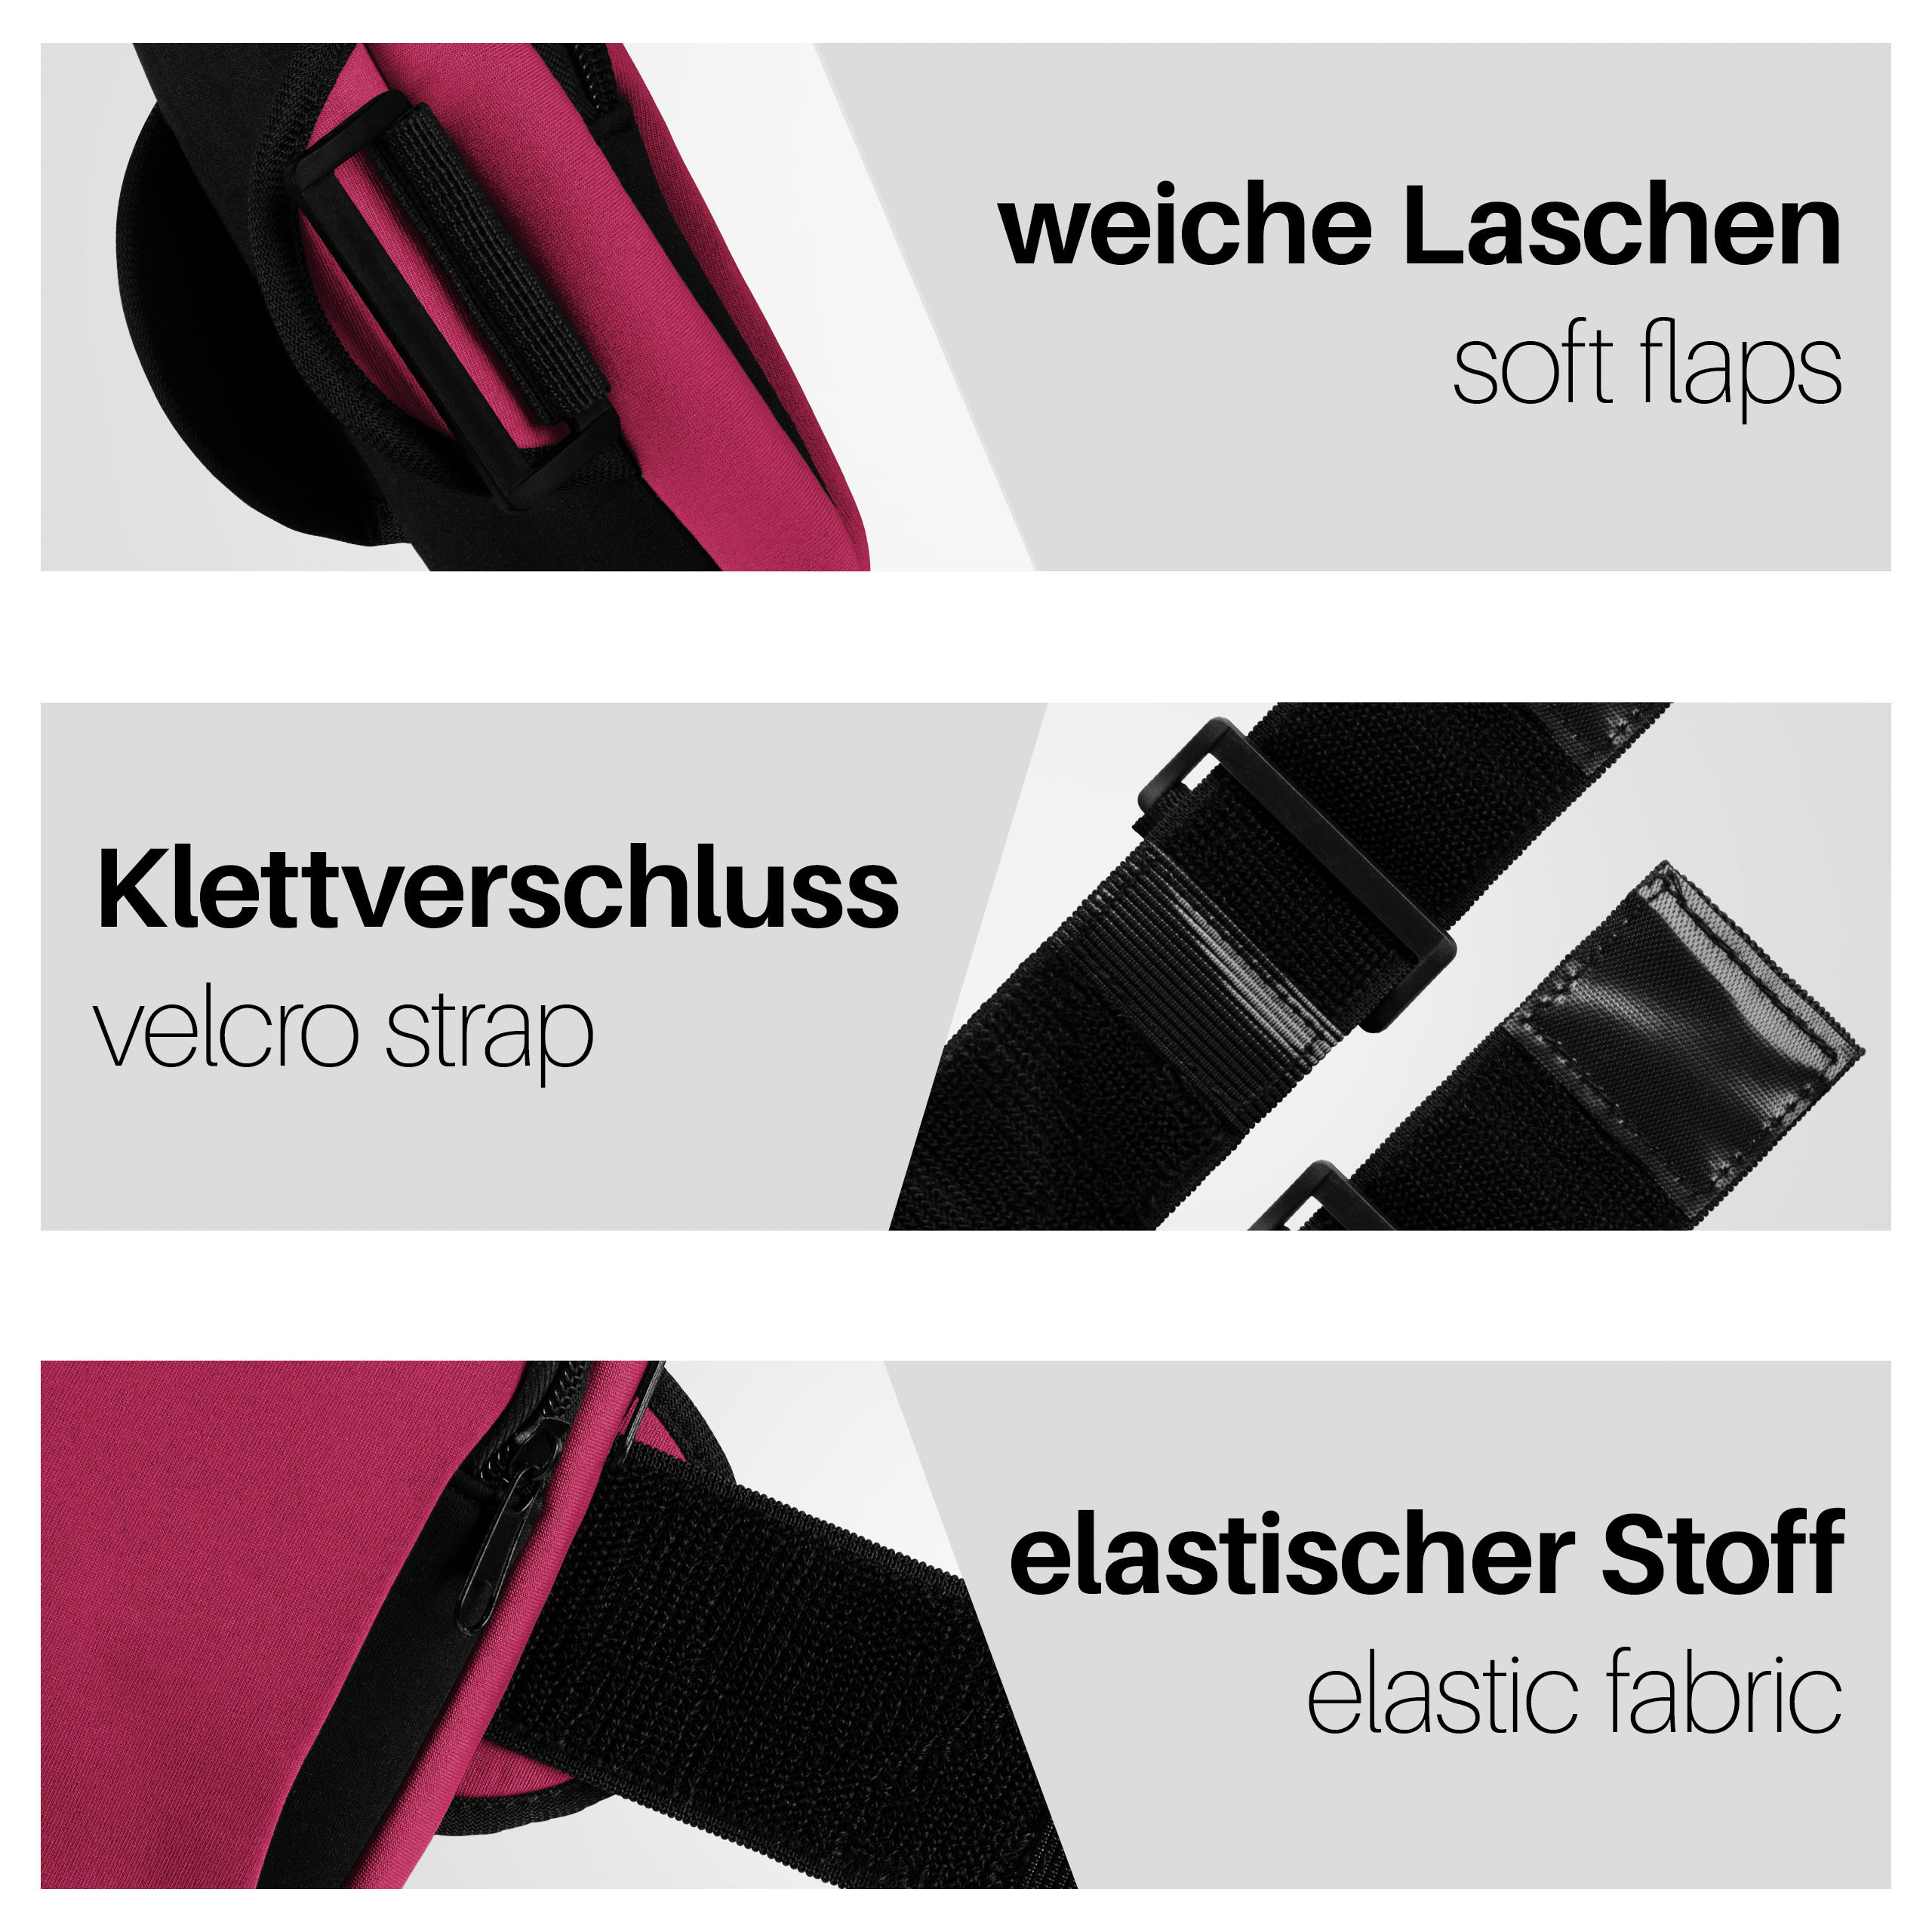 Sport Pink Cover, Full Armband, G6, MOEX LG,